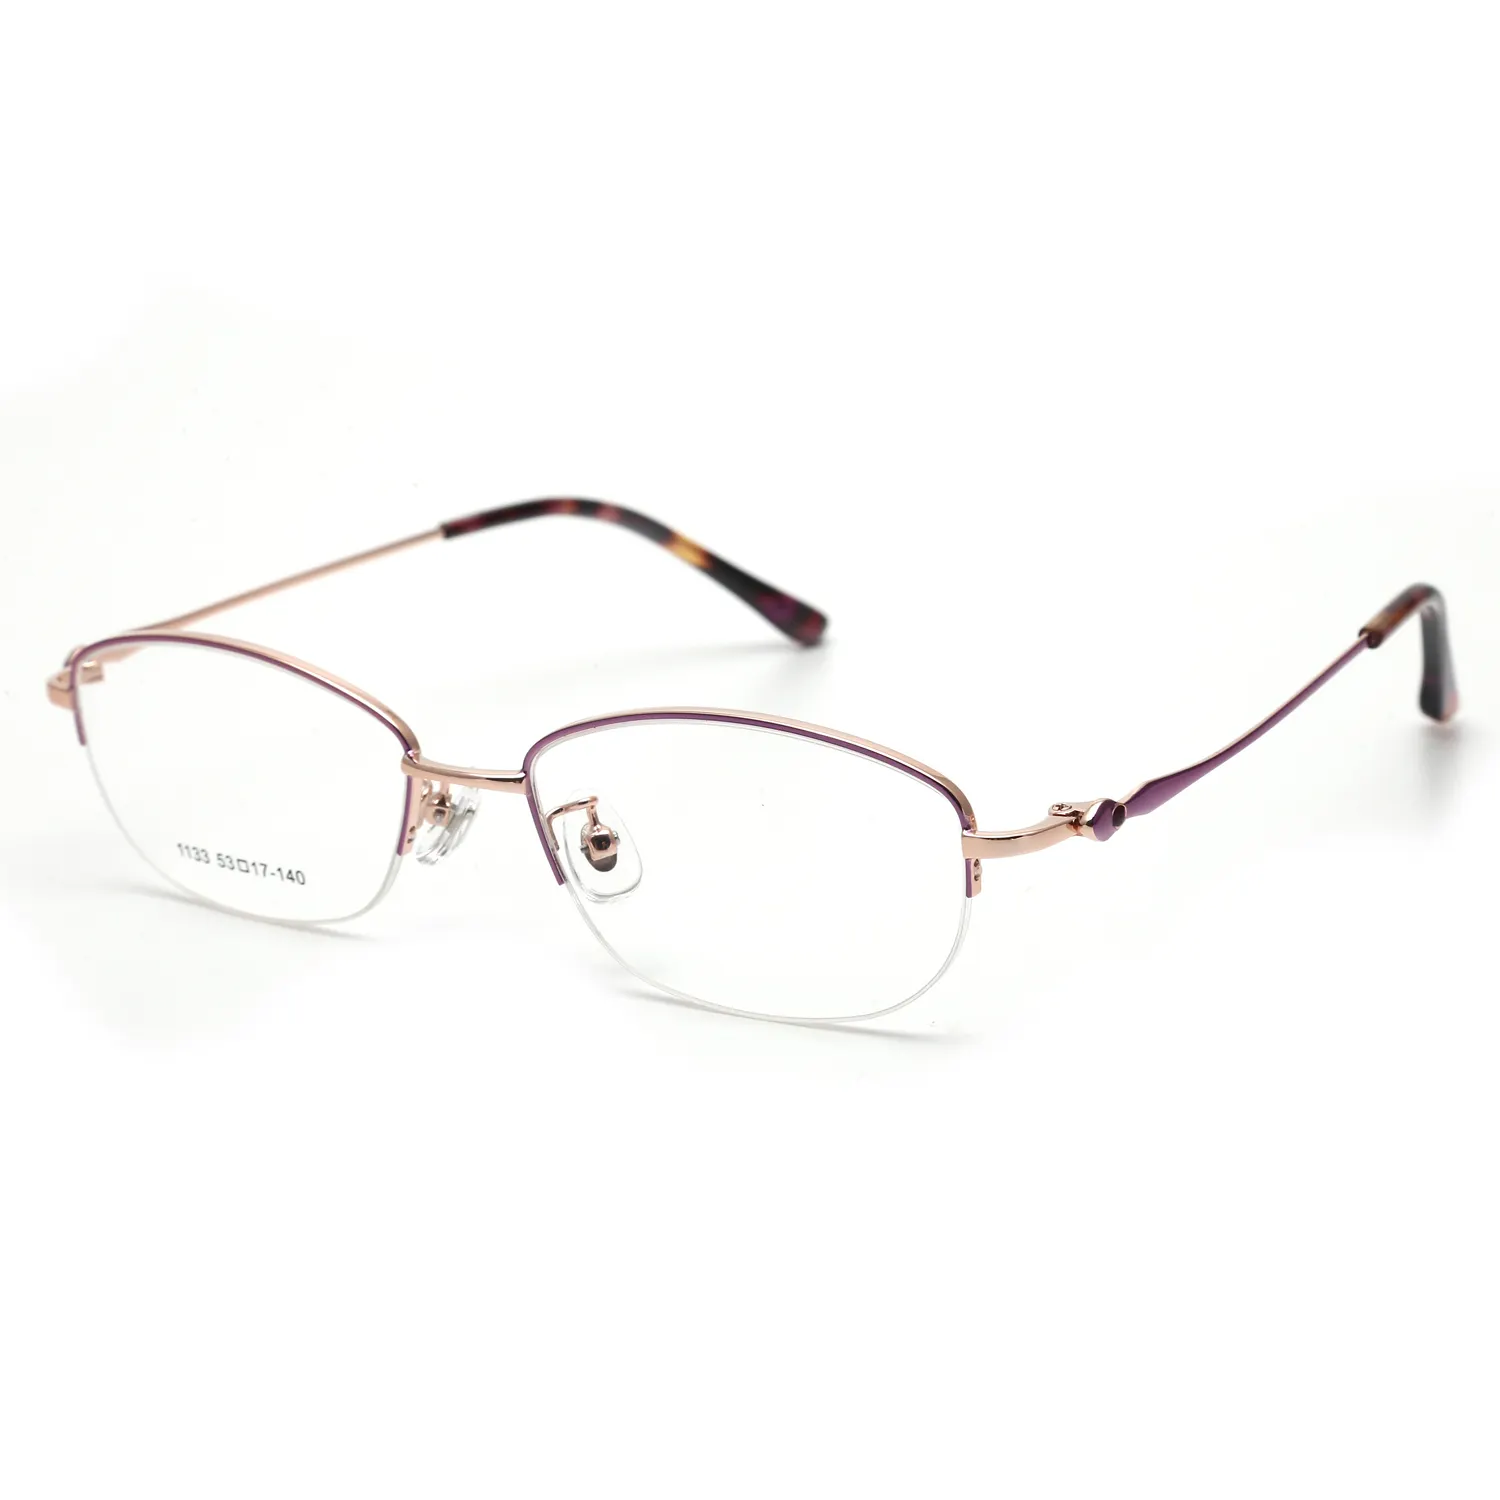 New Designer Woman Glasses Optical Frames Metal Cat Eye Glasses Frame Clear Lens Black Silver Gold Eyeglass Frame